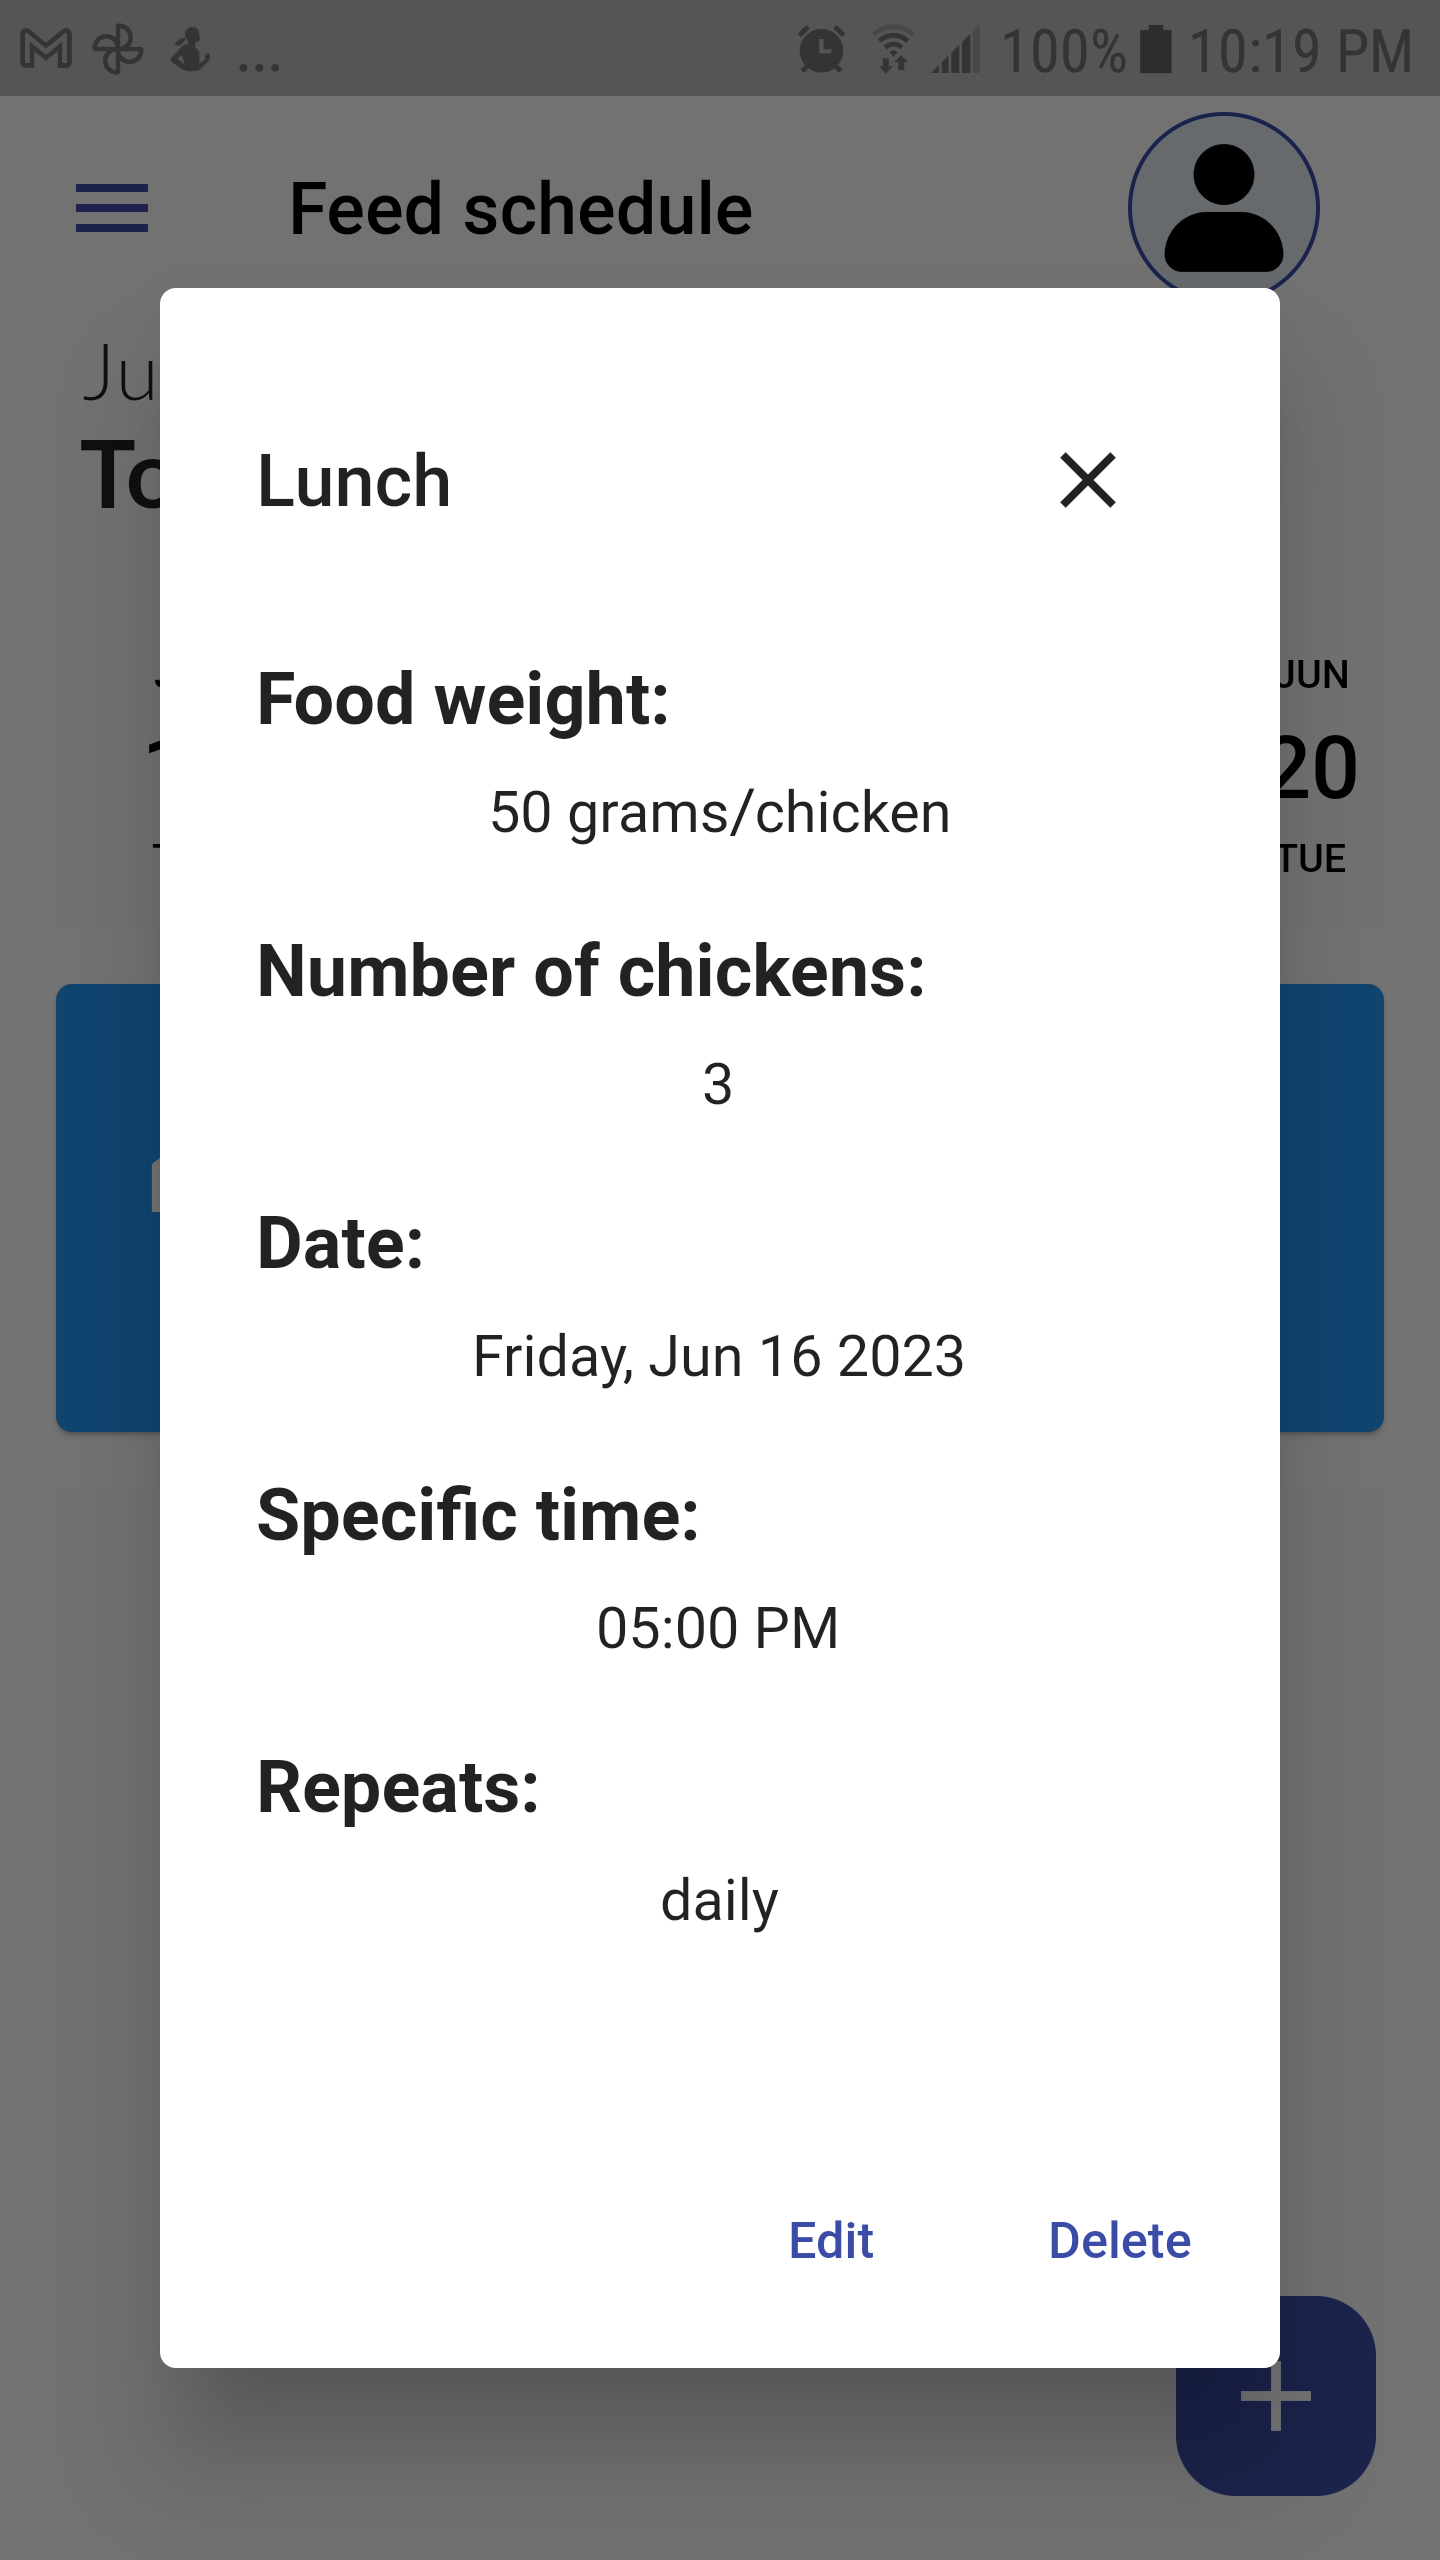 Automatic Chicken Feeder App using Flutter